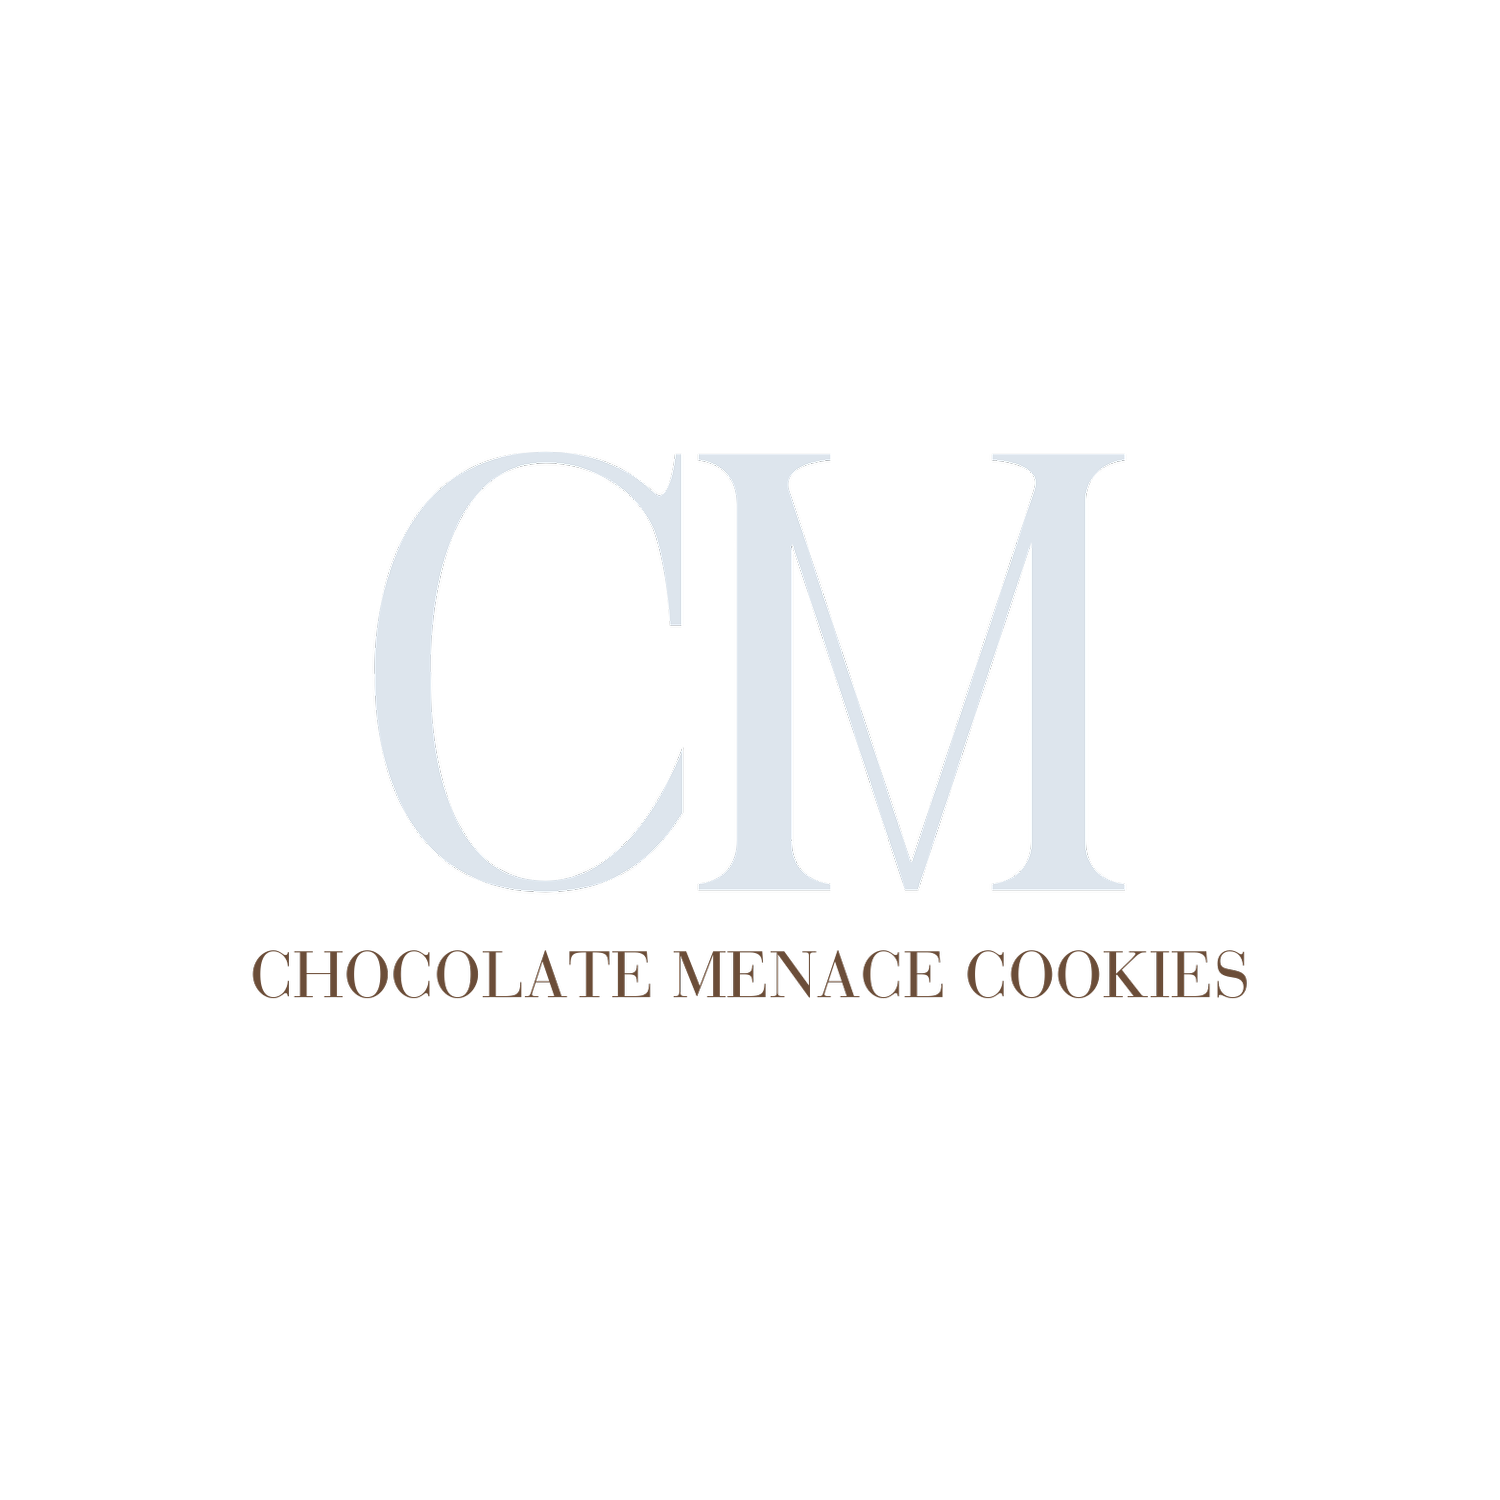 Chocolate Menace Cookies